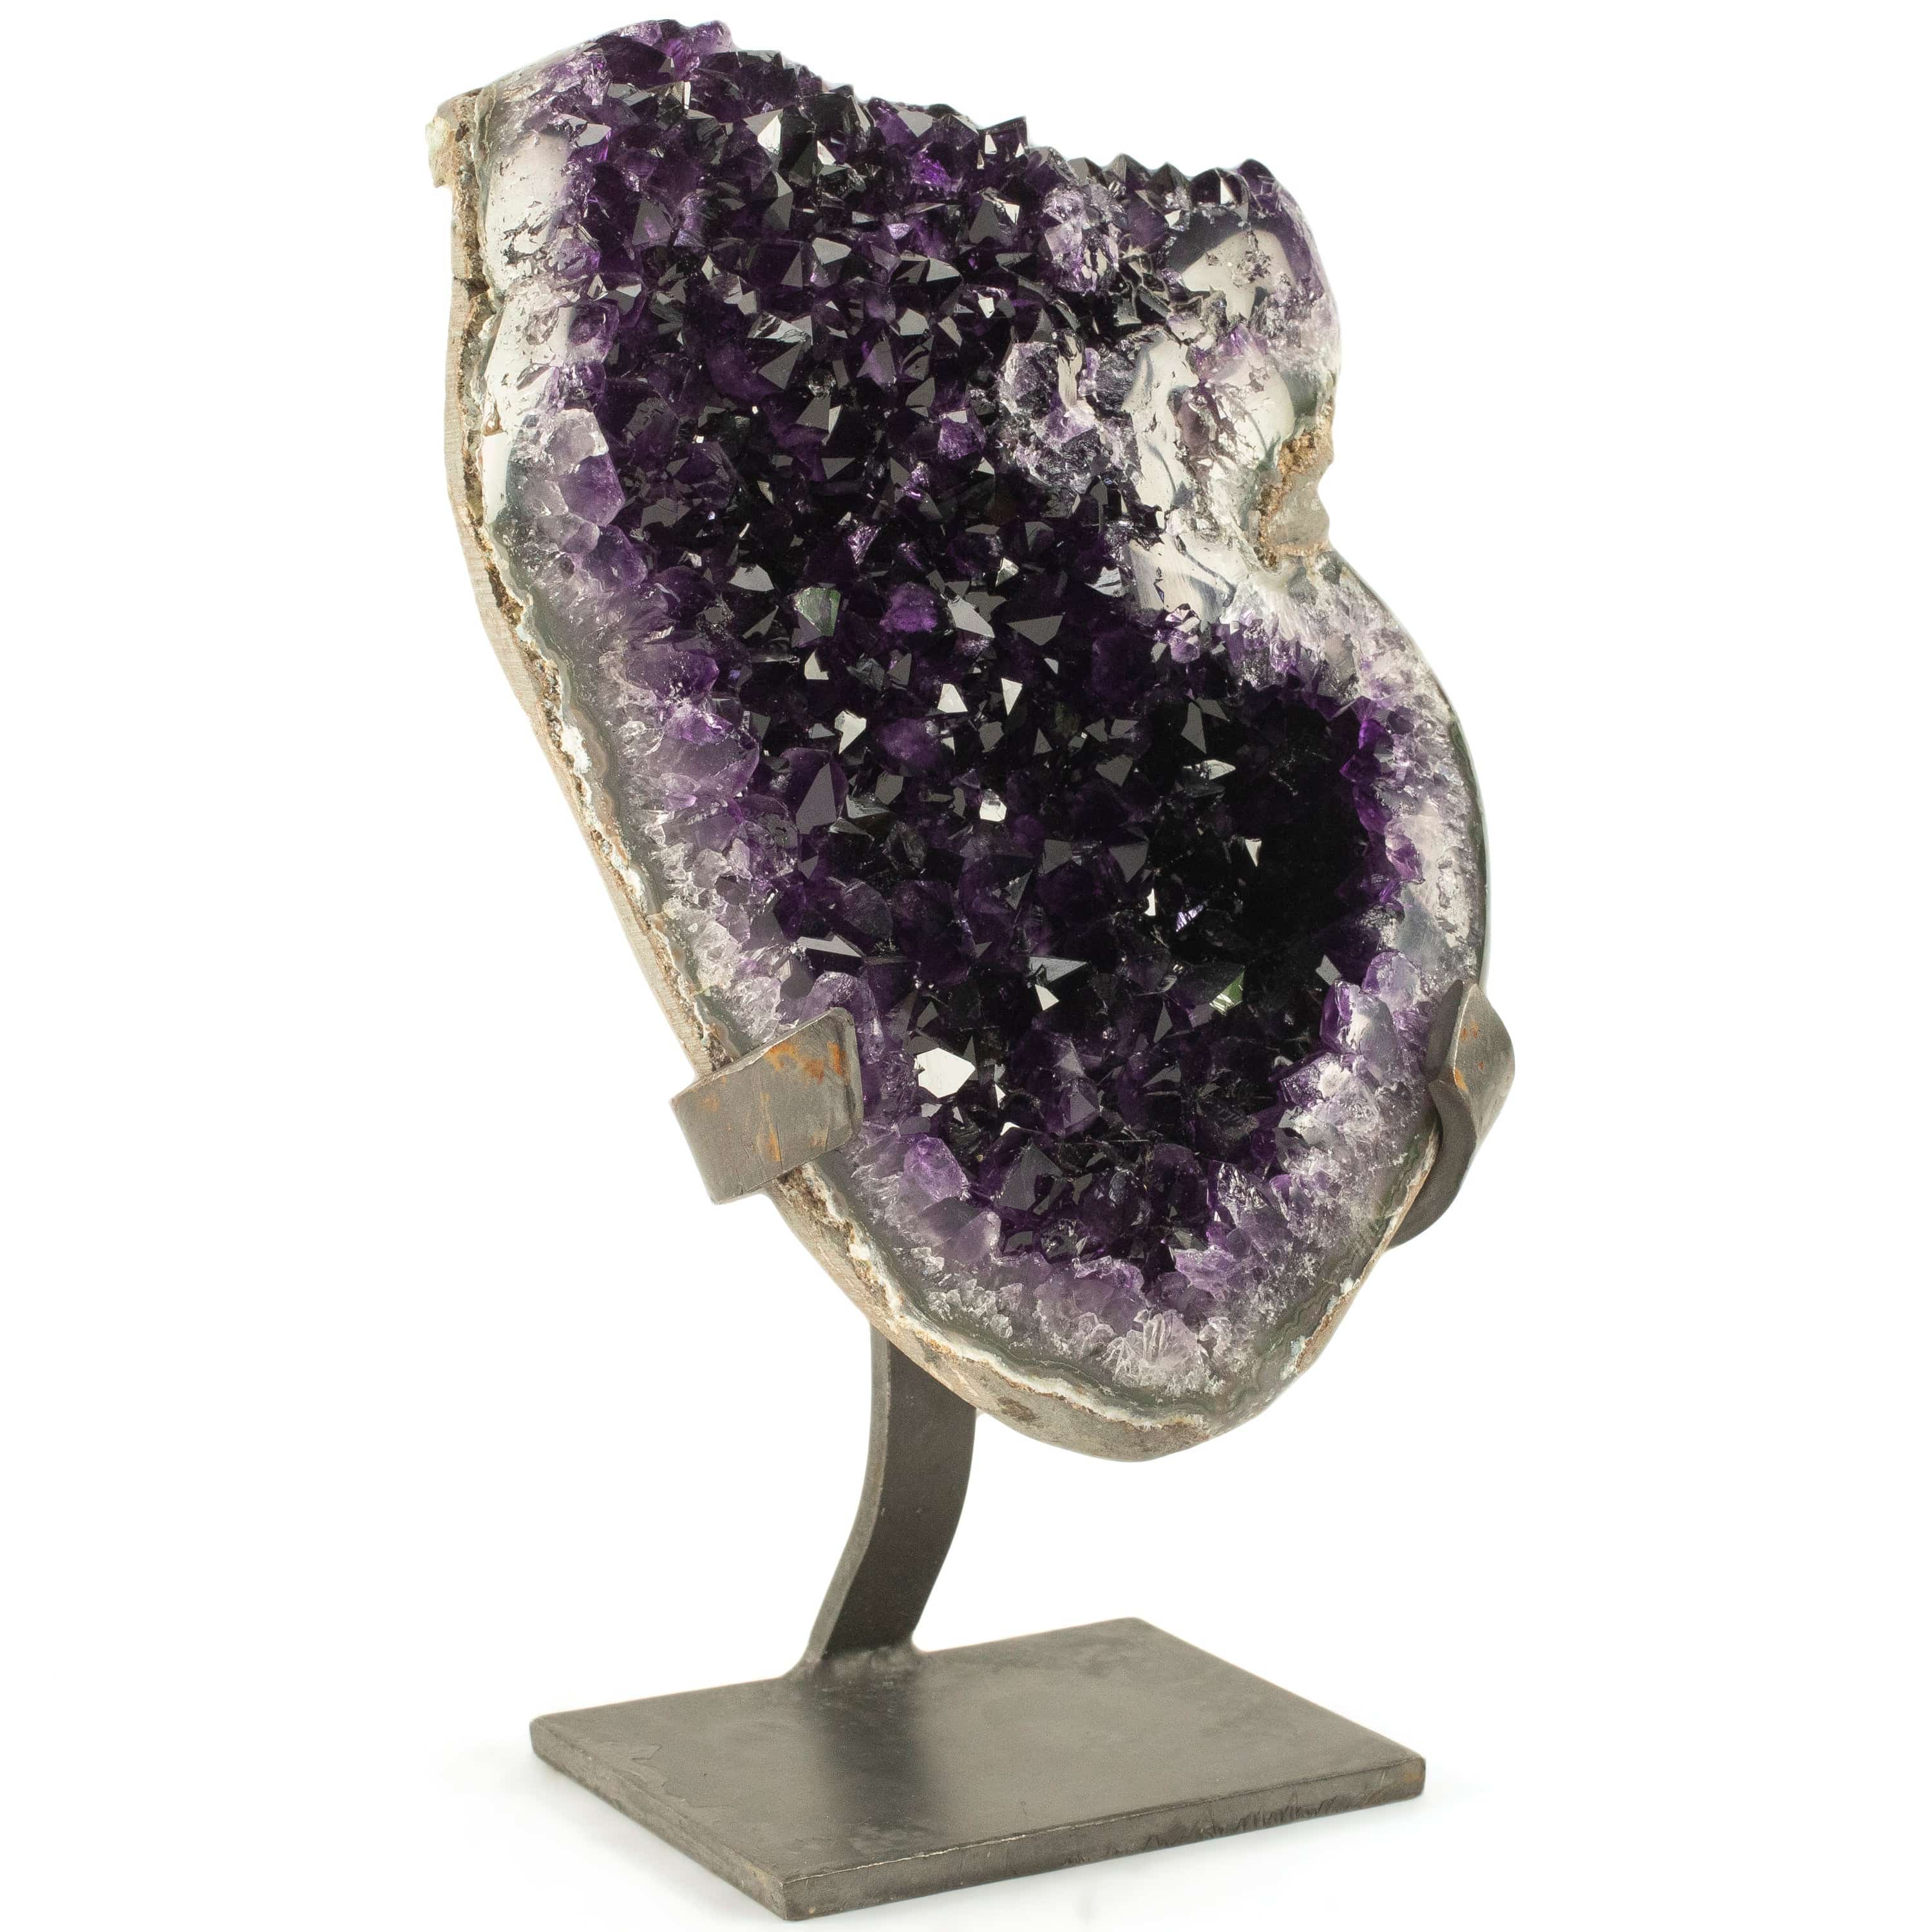 Kalifano Amethyst Uruguayan Amethyst Geode on Custom Stand - 8.6 lbs / 10 in. UAG4000.002